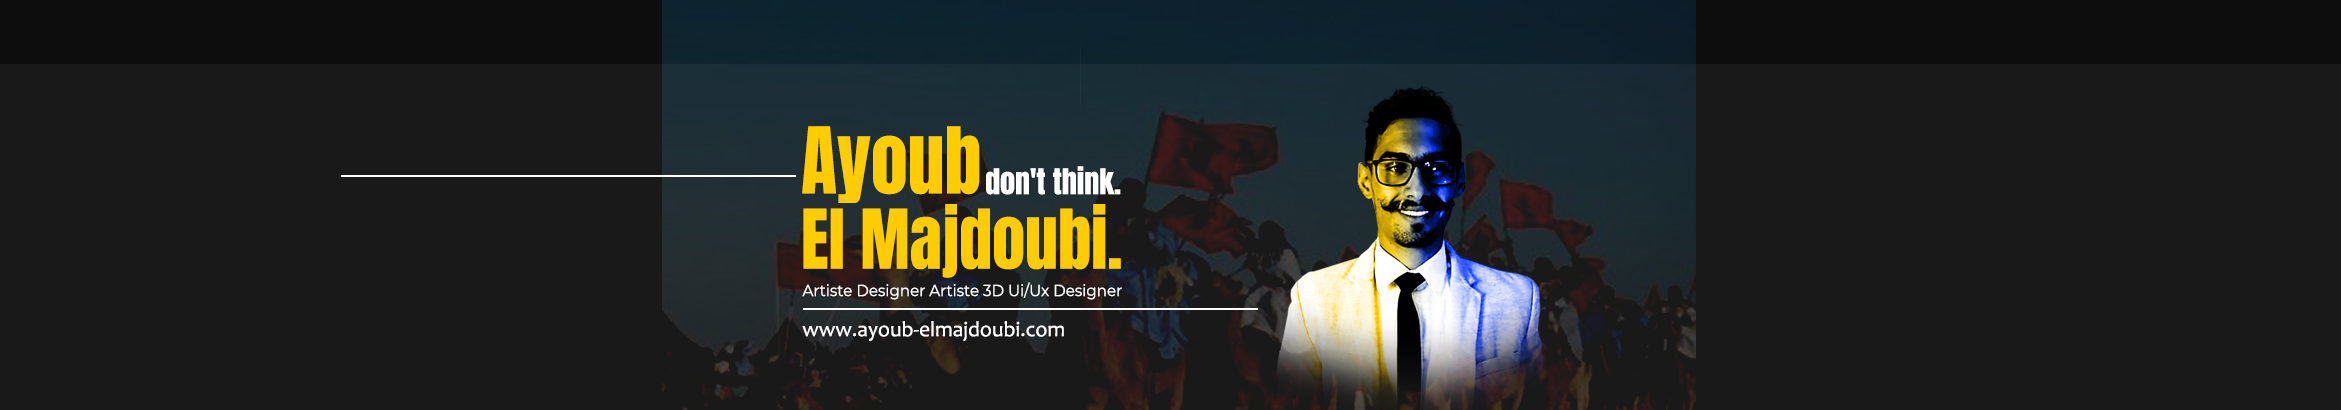 ayoub el majdoubi's profile banner